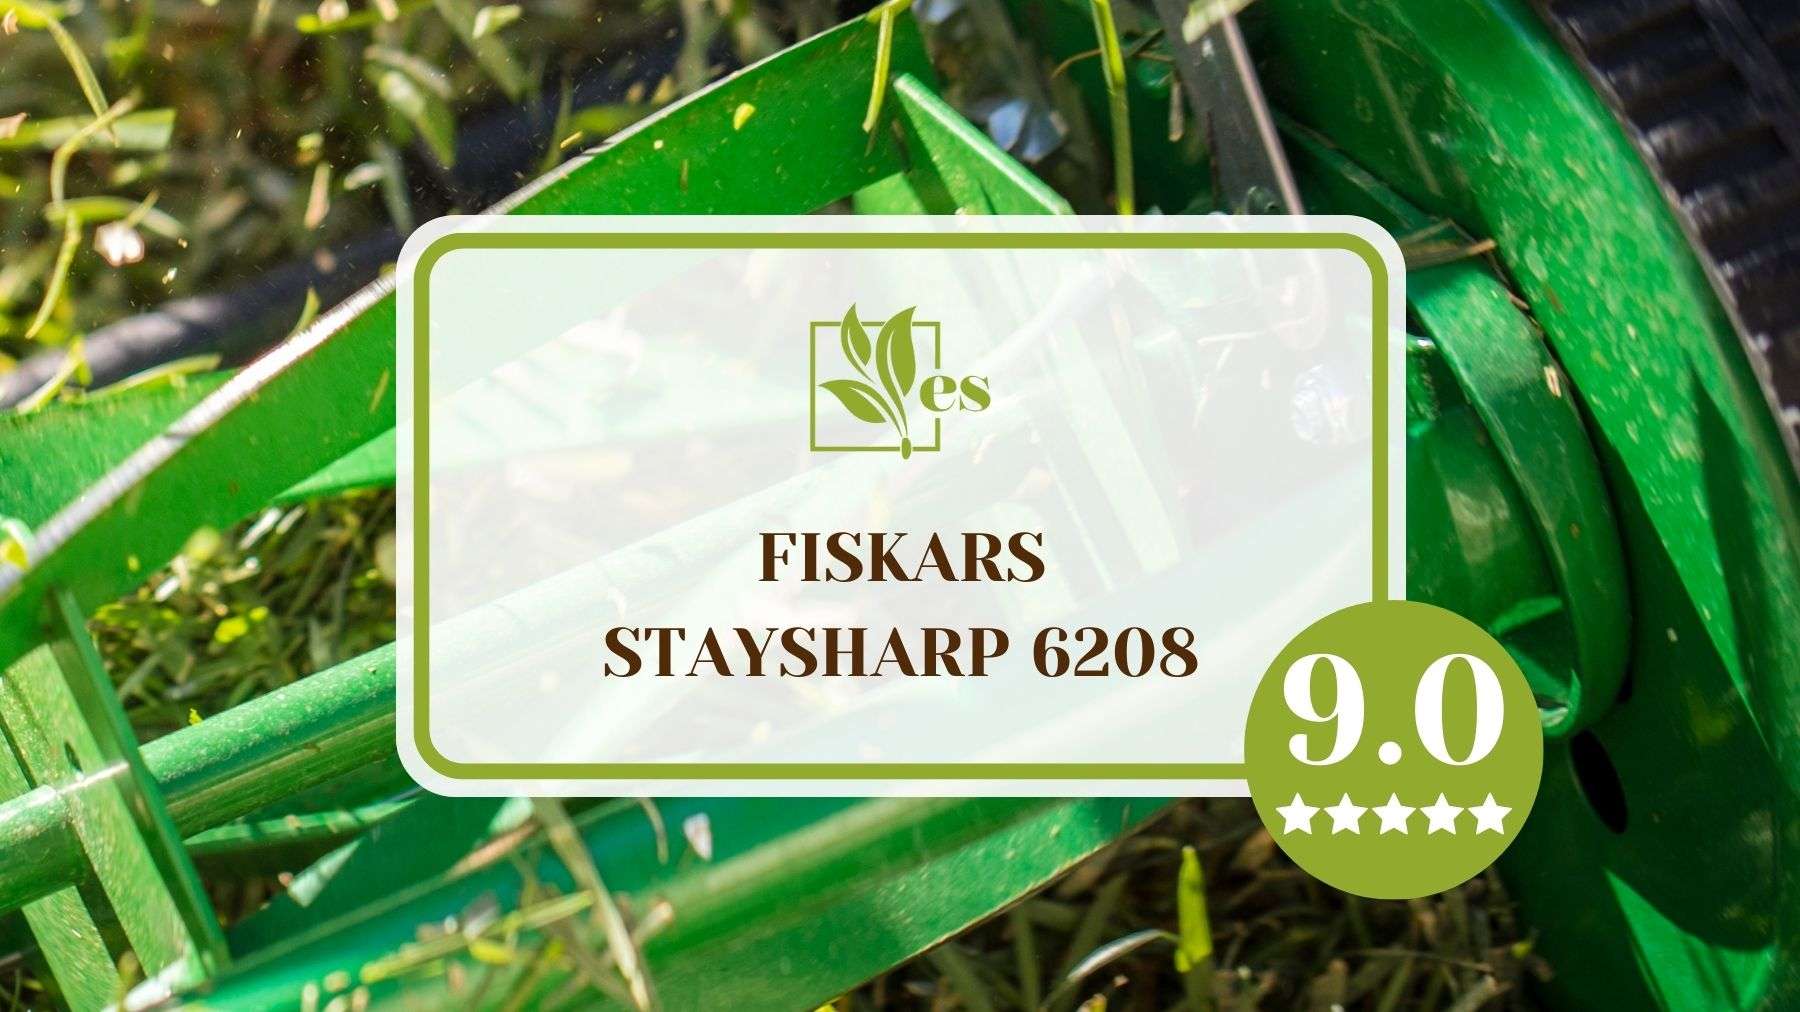 Fiskars Staysharp 6208